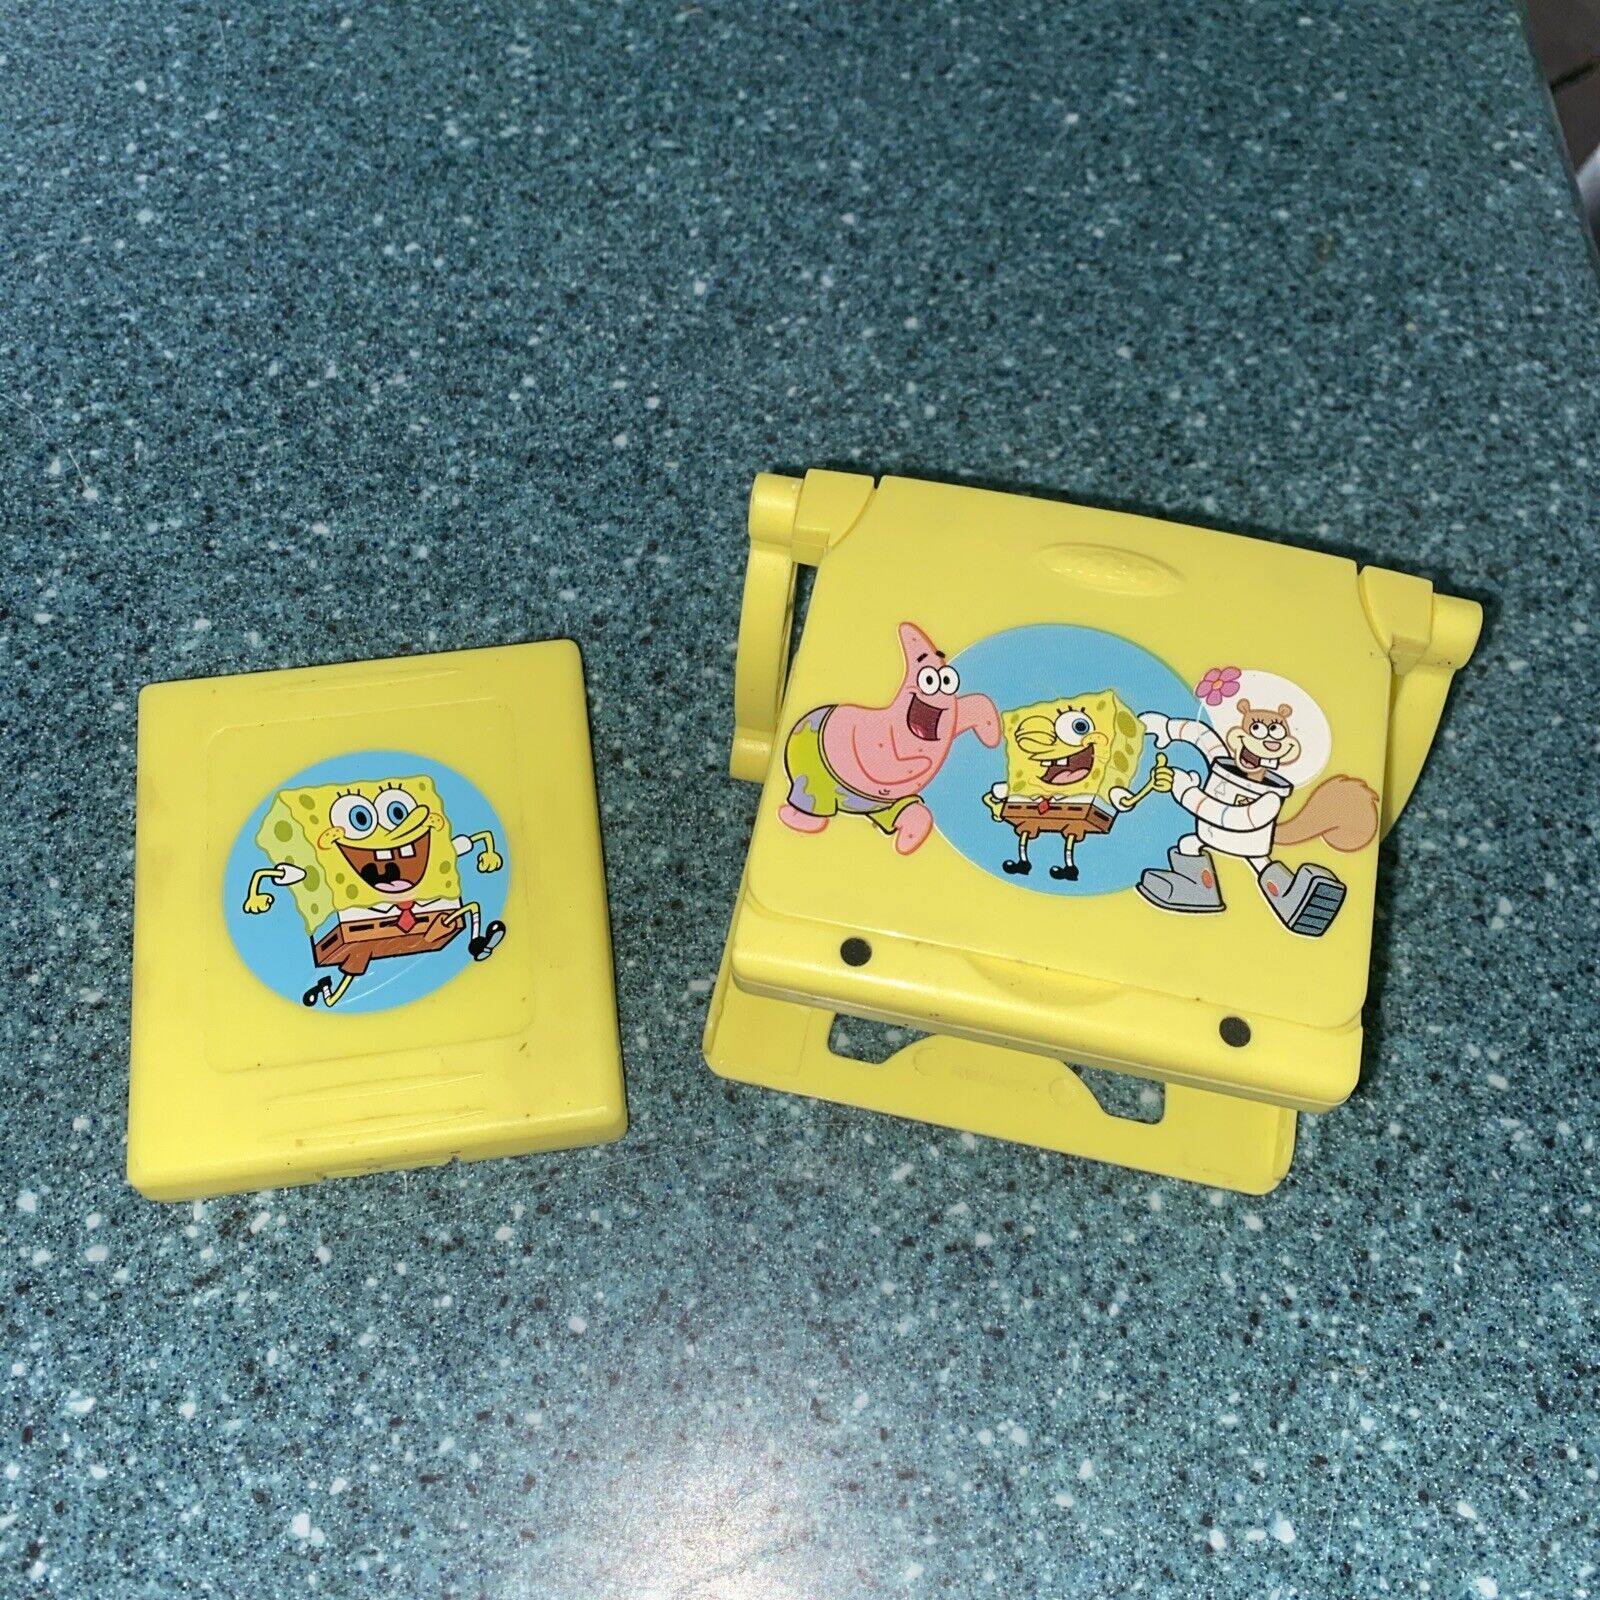 2005 SpongeBob SquarePants Intec GBA SP Magnifier And game Case